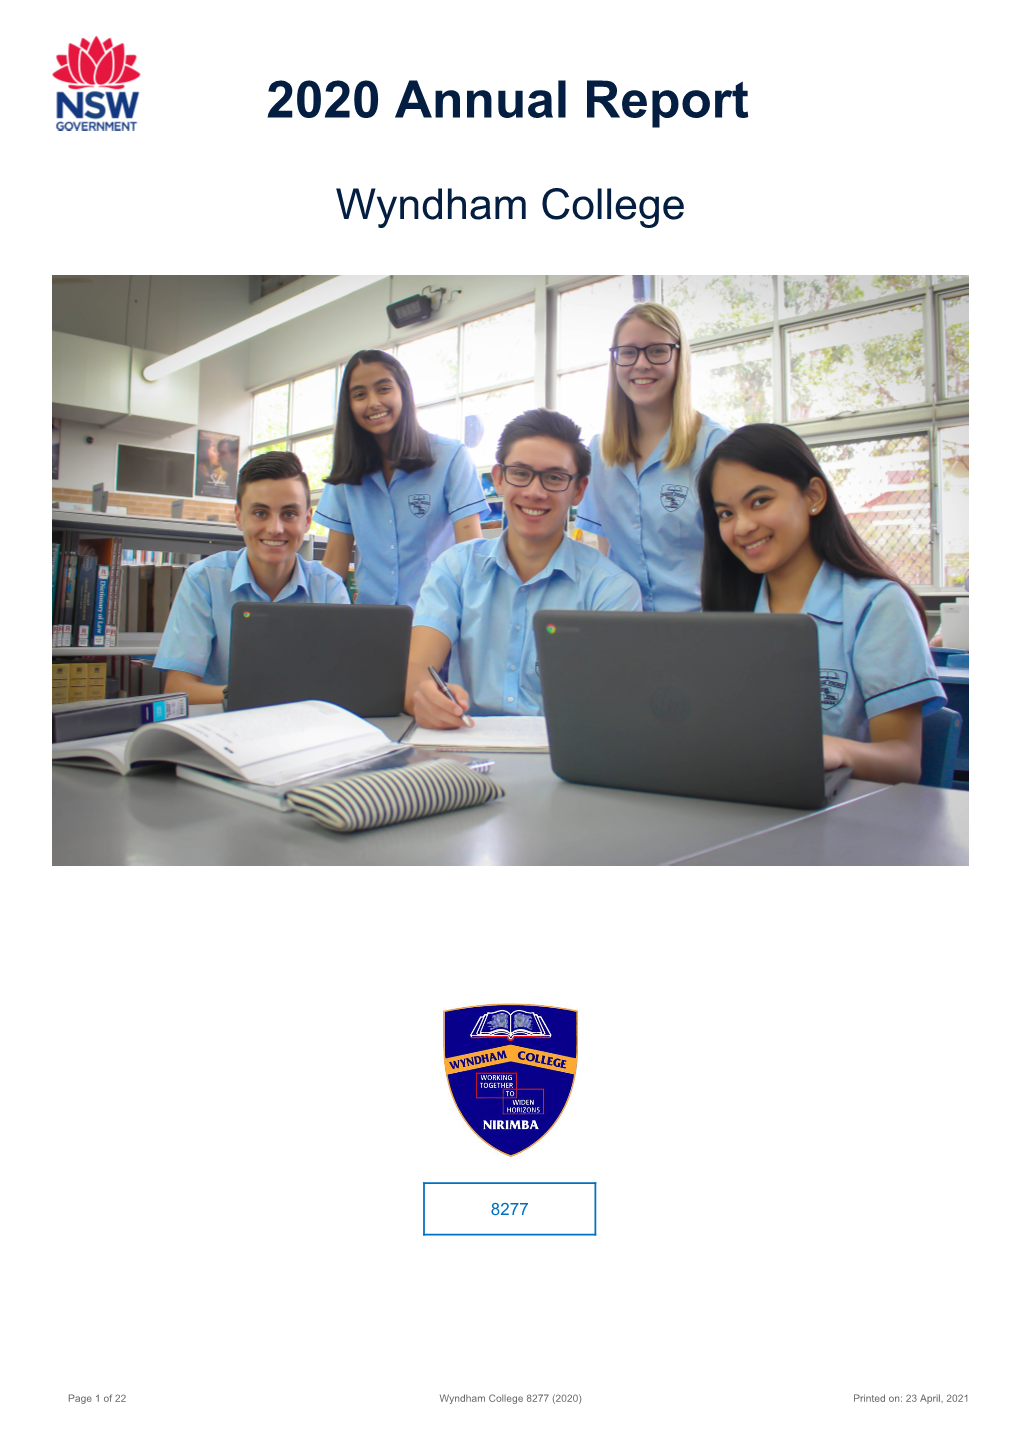 2020 Wyndham College Annual Report